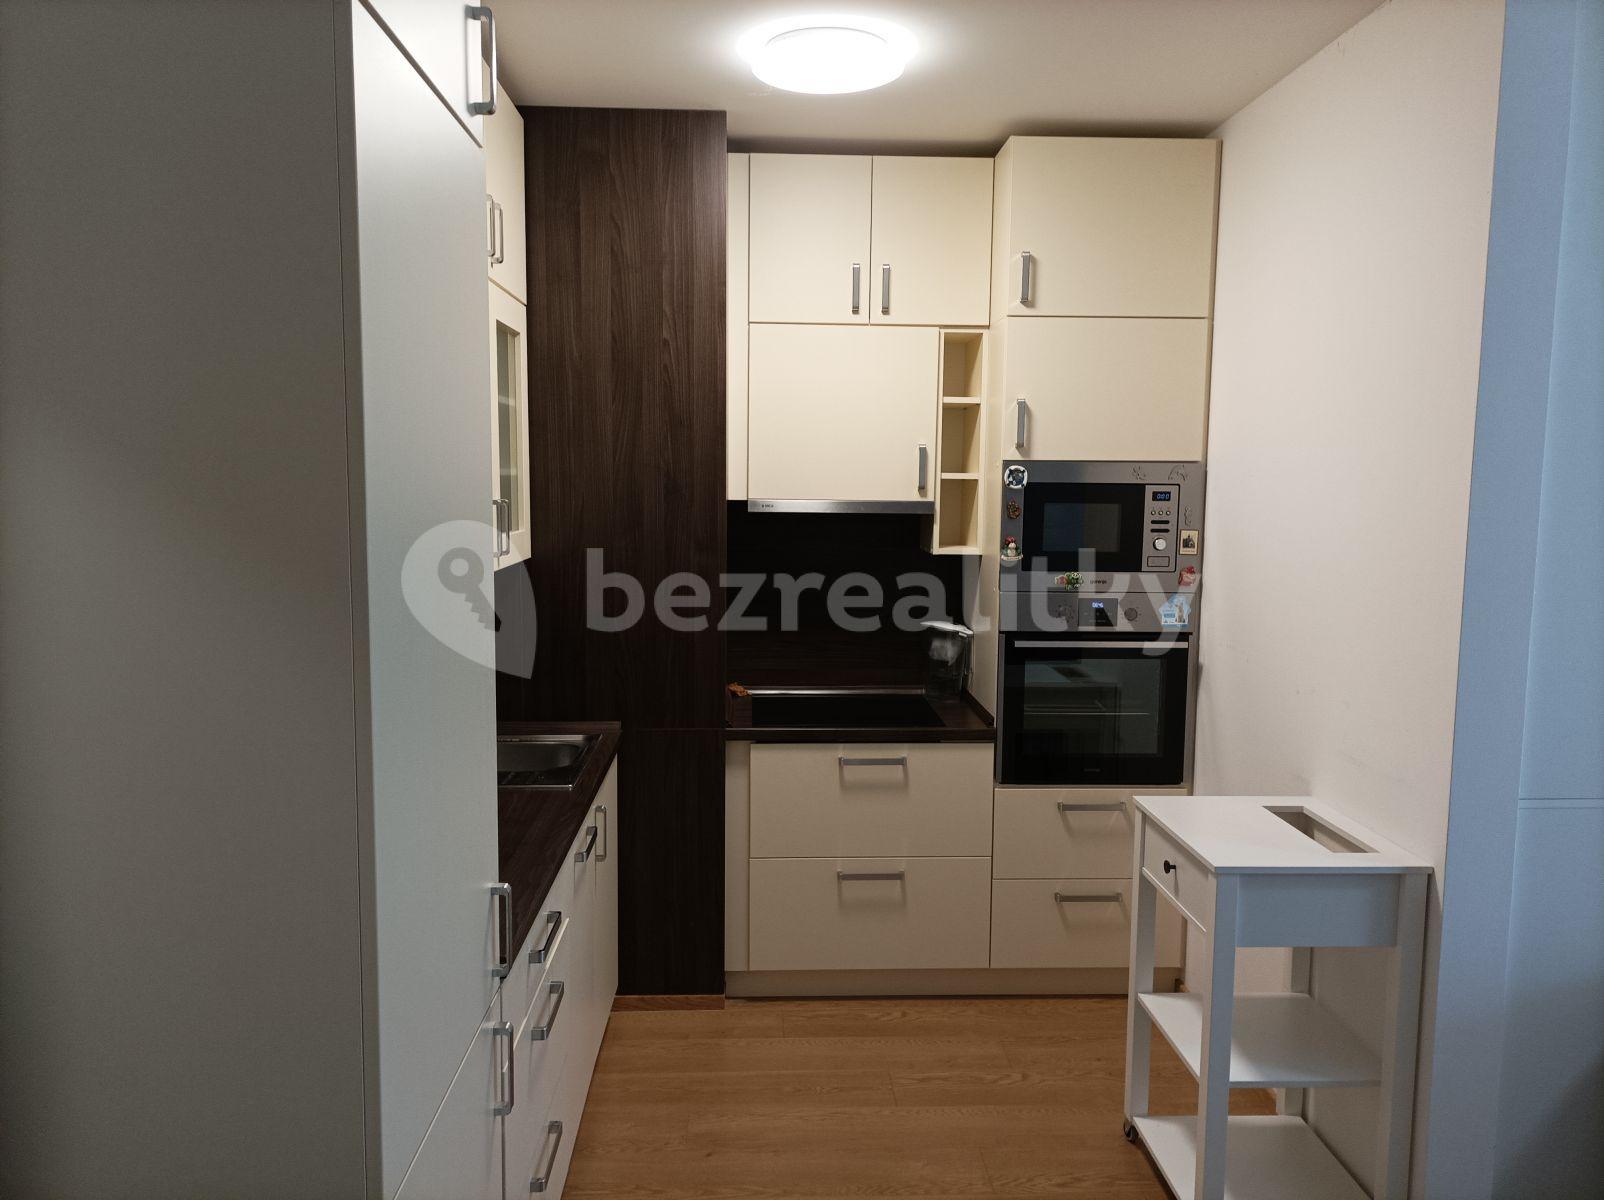 1 bedroom with open-plan kitchen flat to rent, 49 m², Makedonská, Prague, Prague